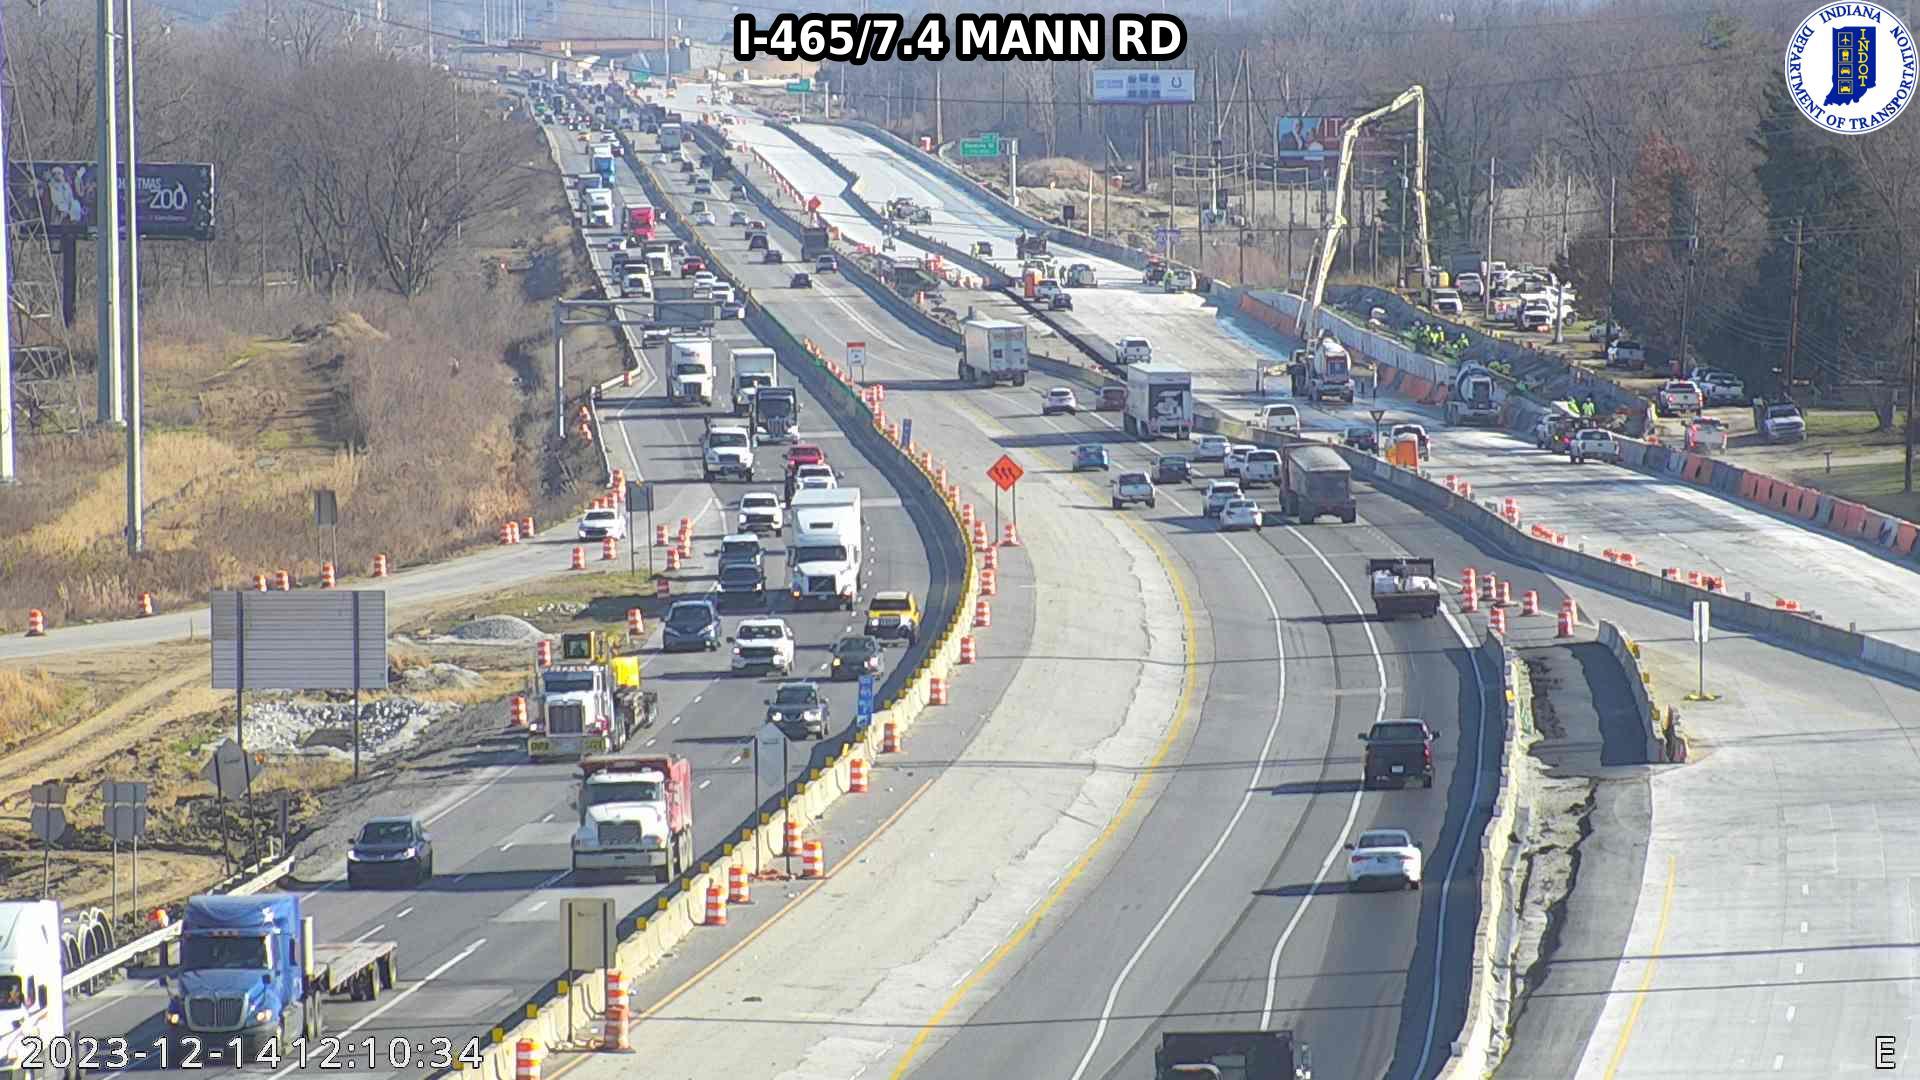 Traffic Cam Indianapolis: I-465: I-465/7.4 MANN RD